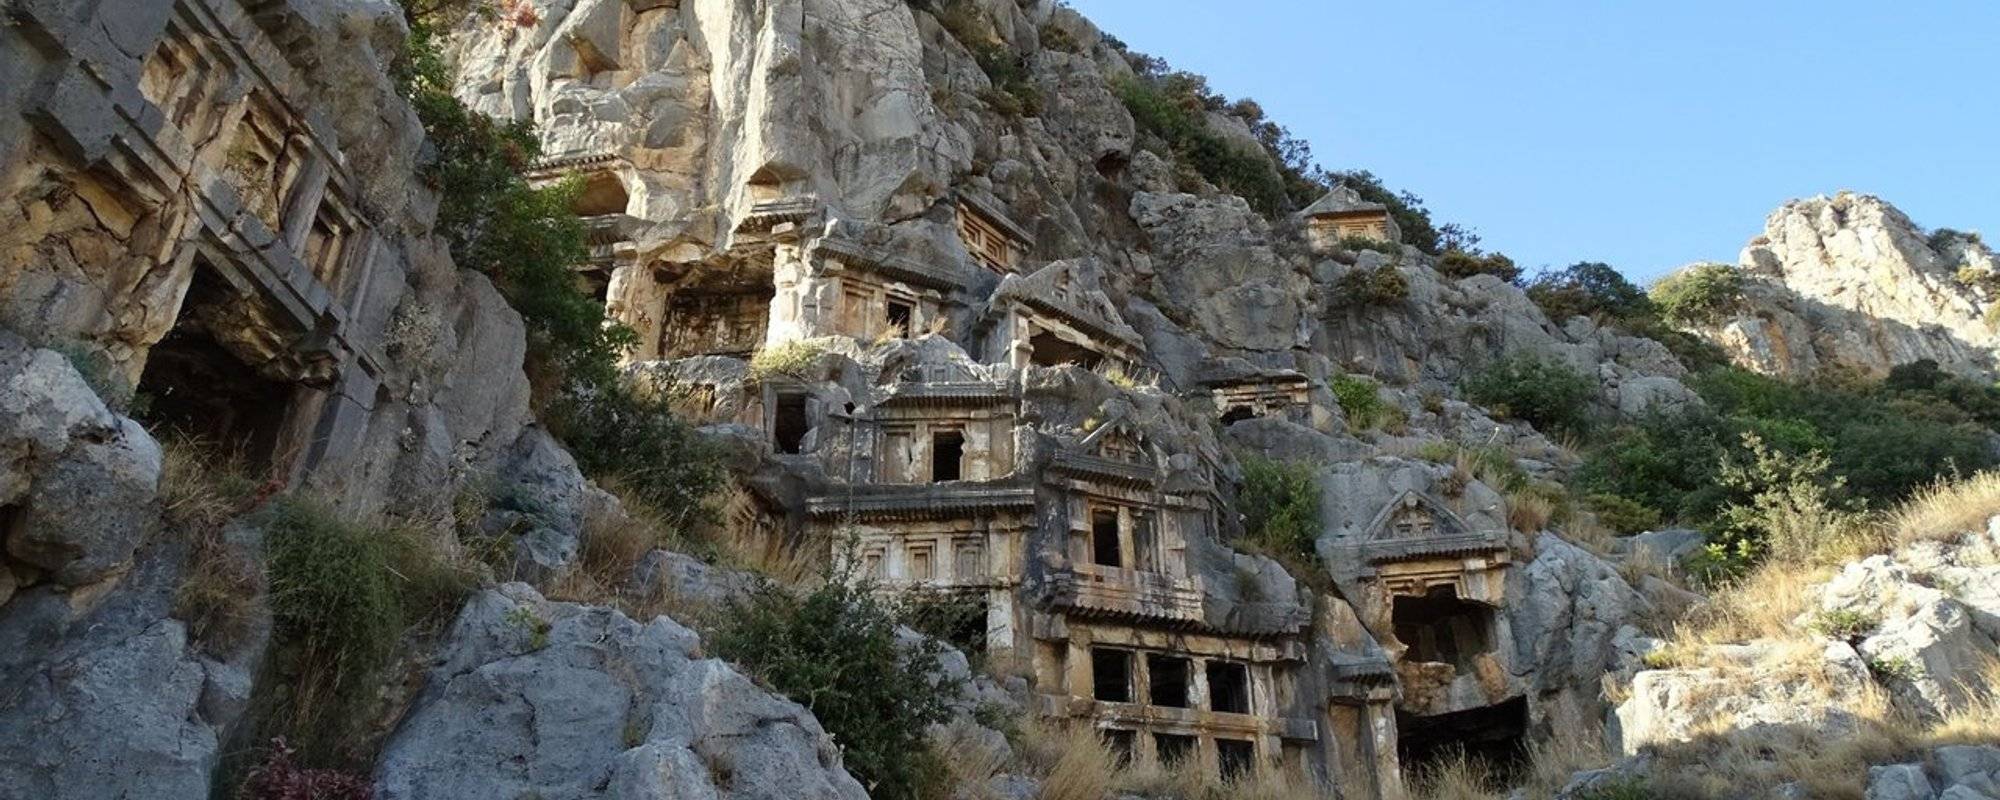 Rock Tombs in Myra, Turkey